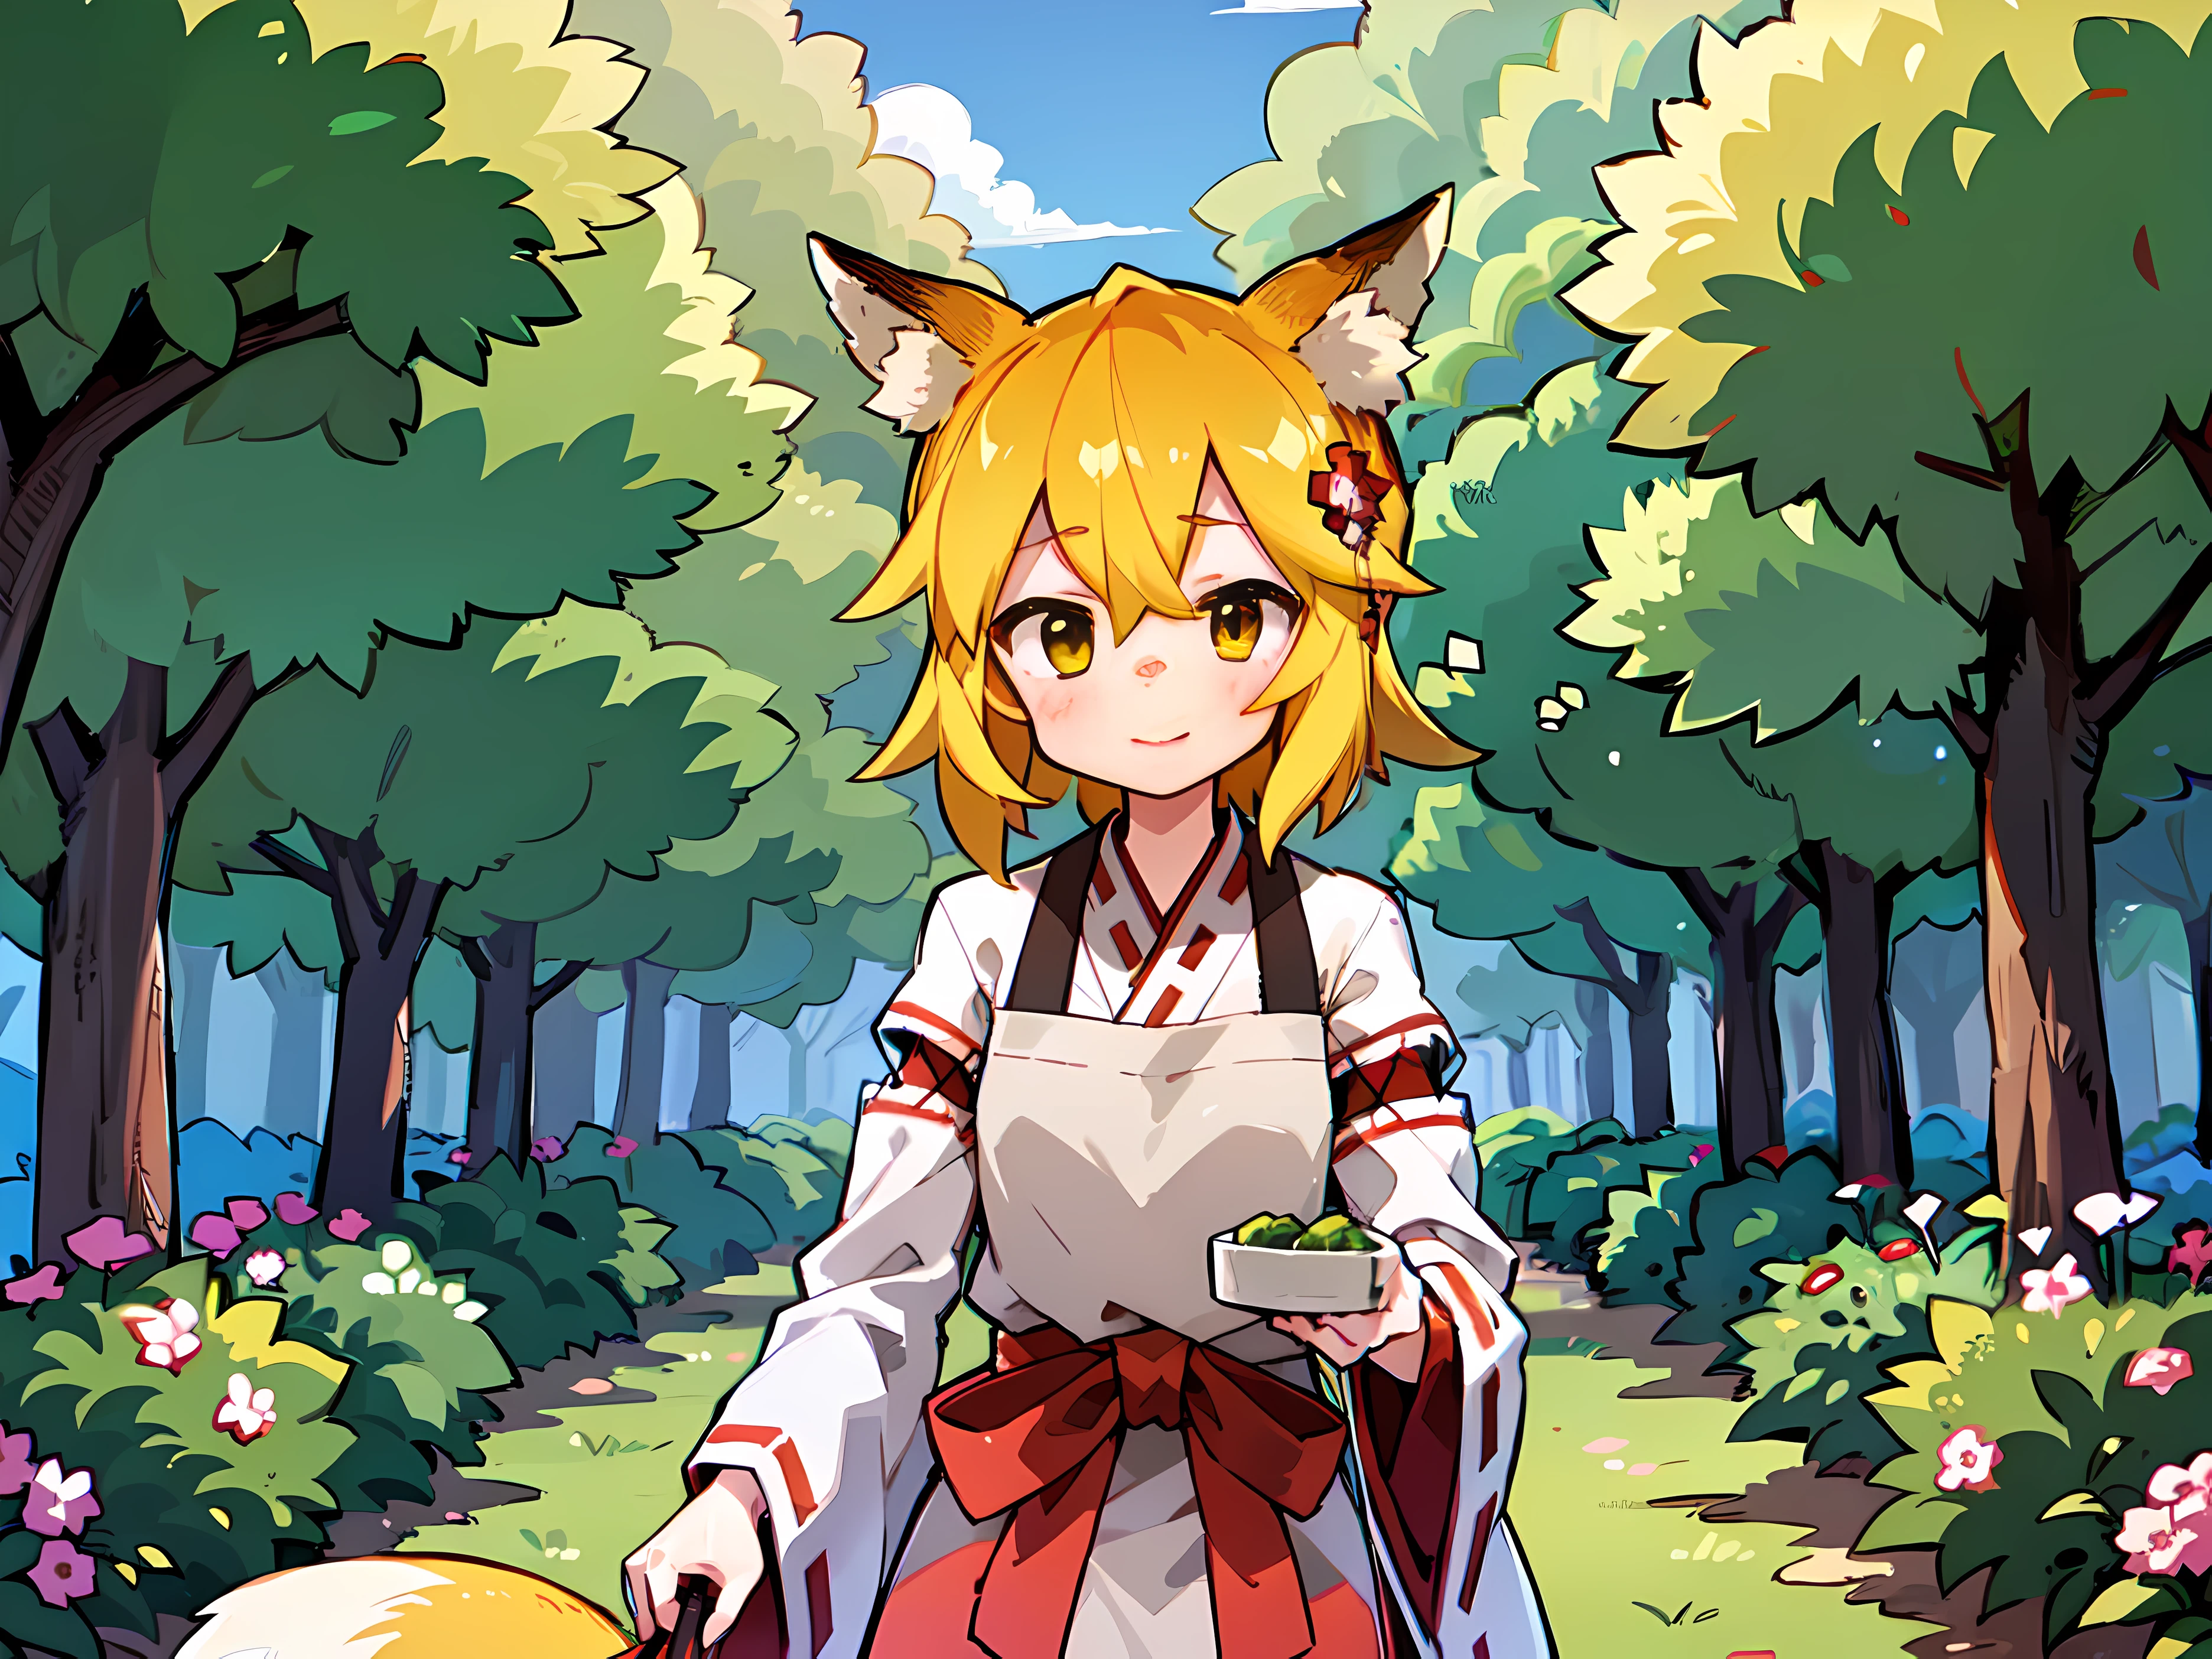 A  girl, Fox ears, 4K Image, flowers of different colors, field, Beautiful trees, Maximum details, Pink, Sakura, village, village